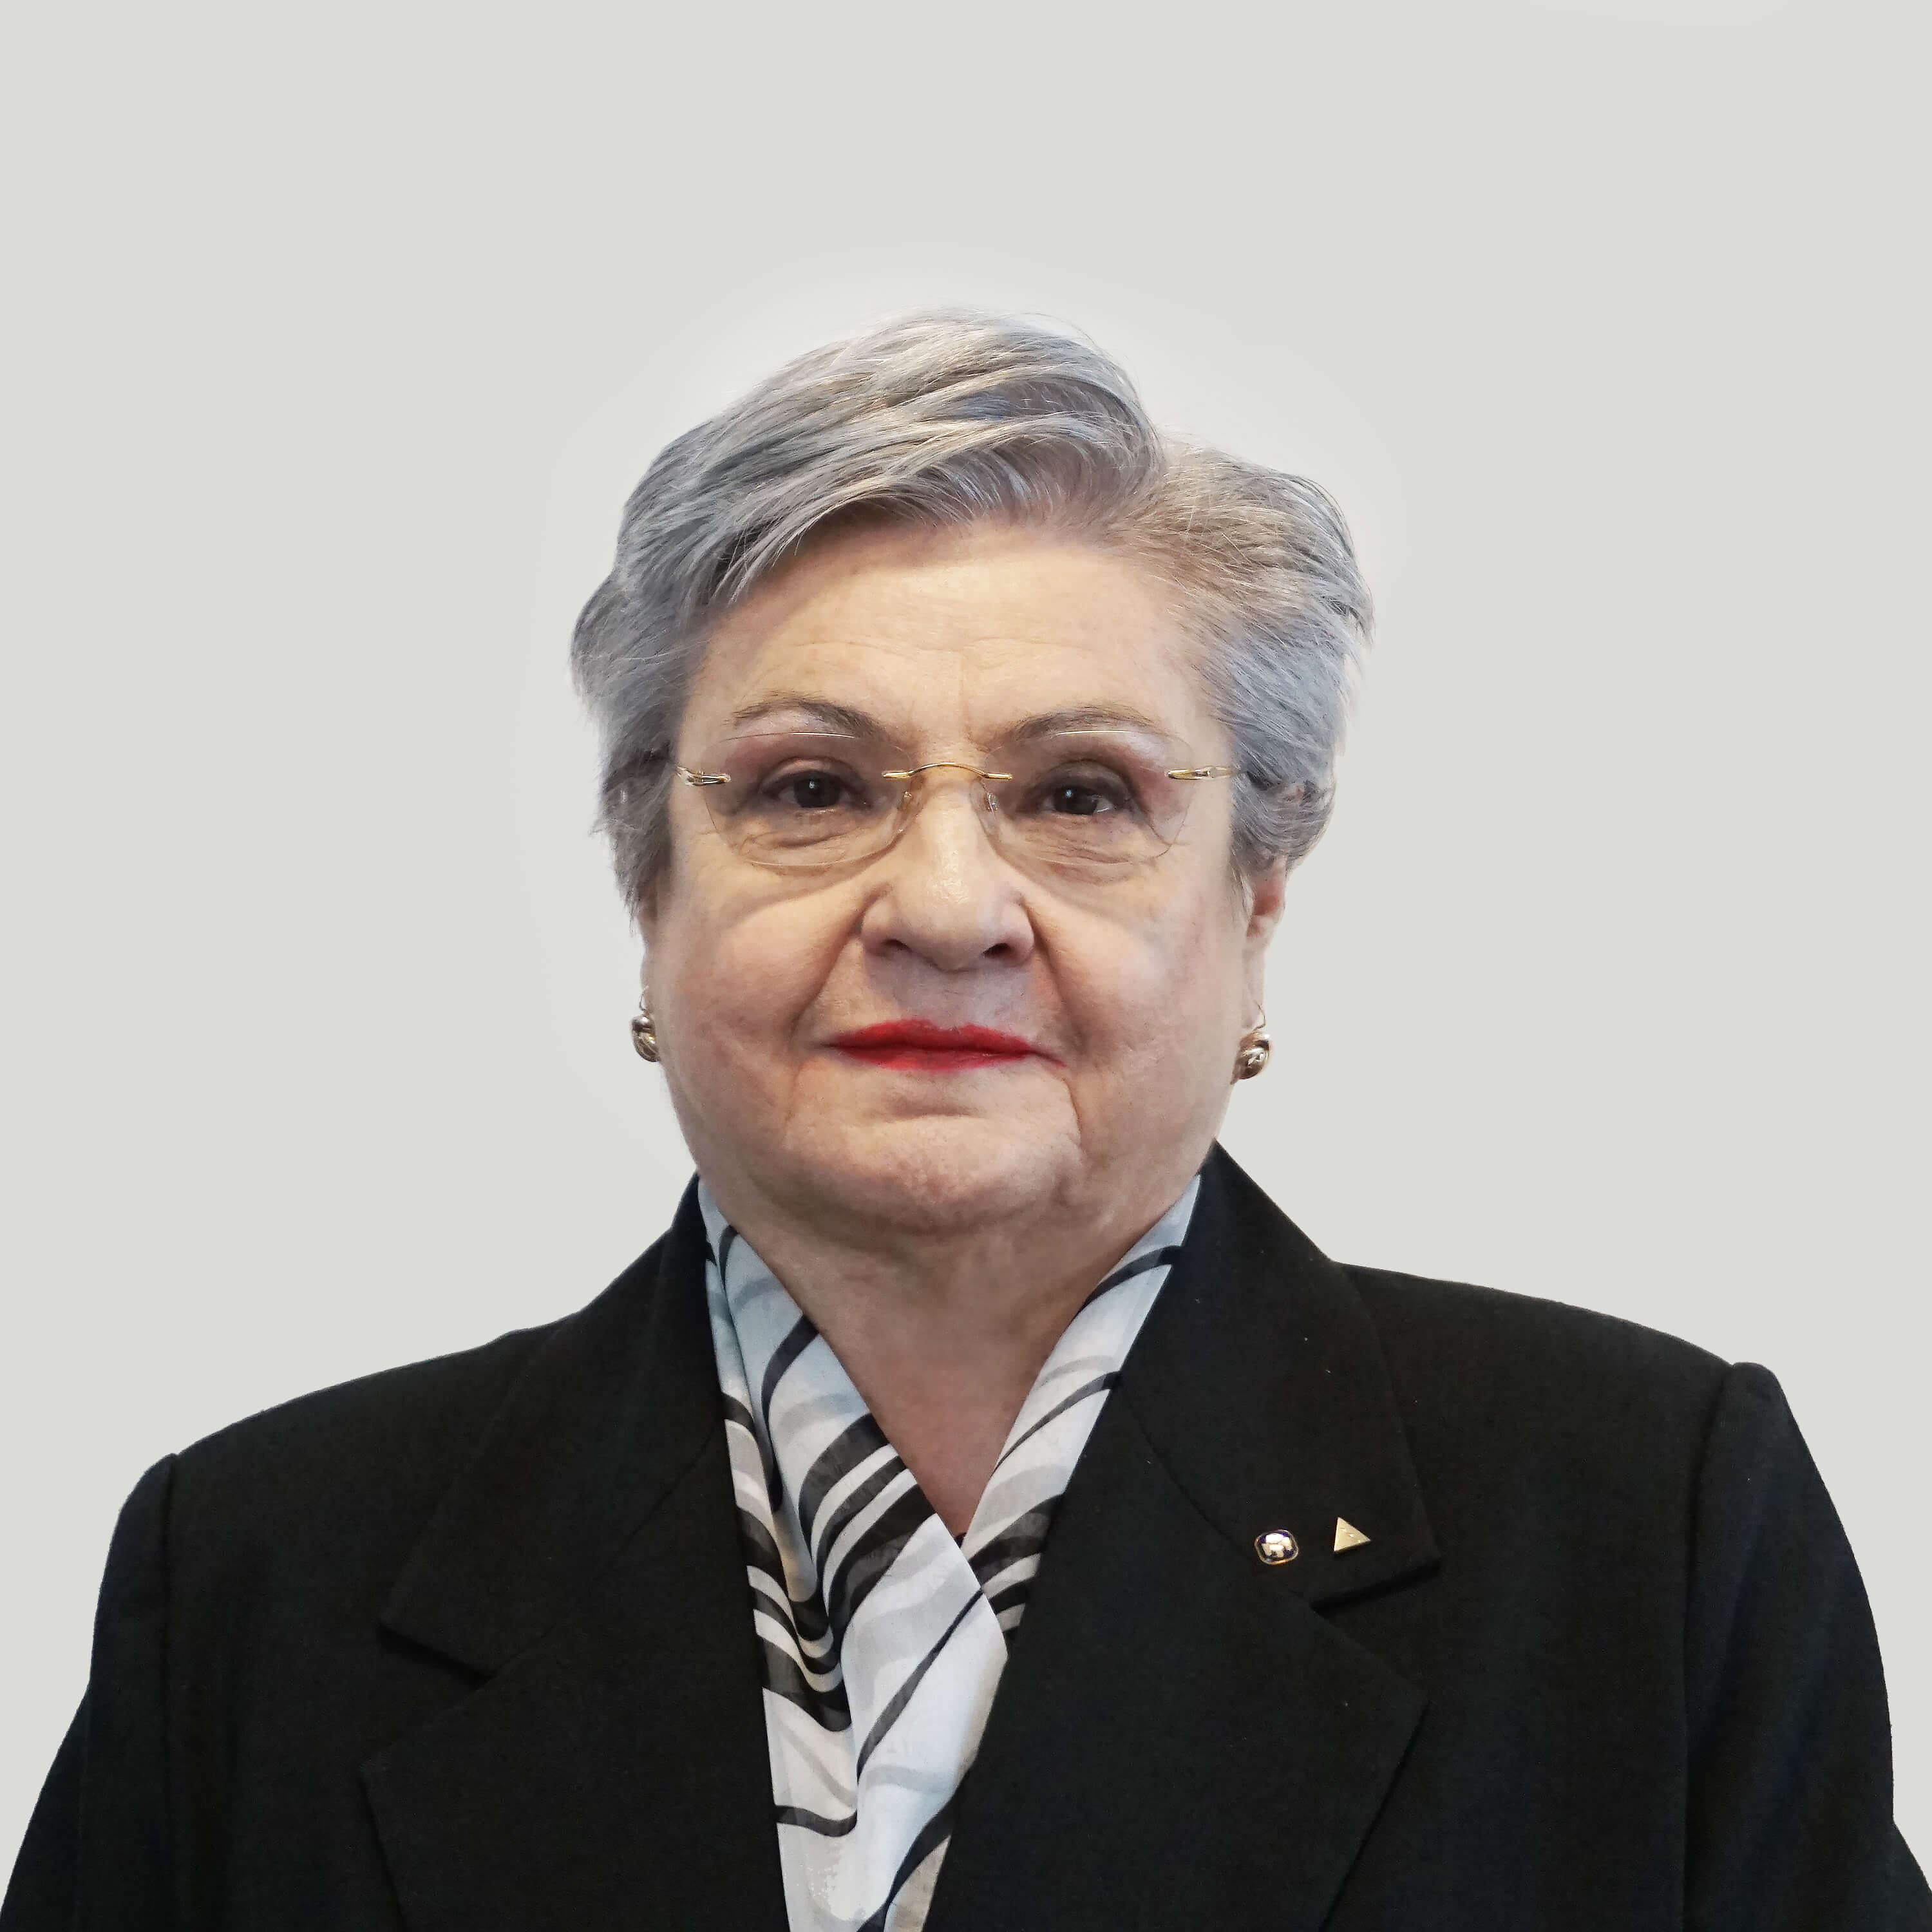 Anna Sýkorová